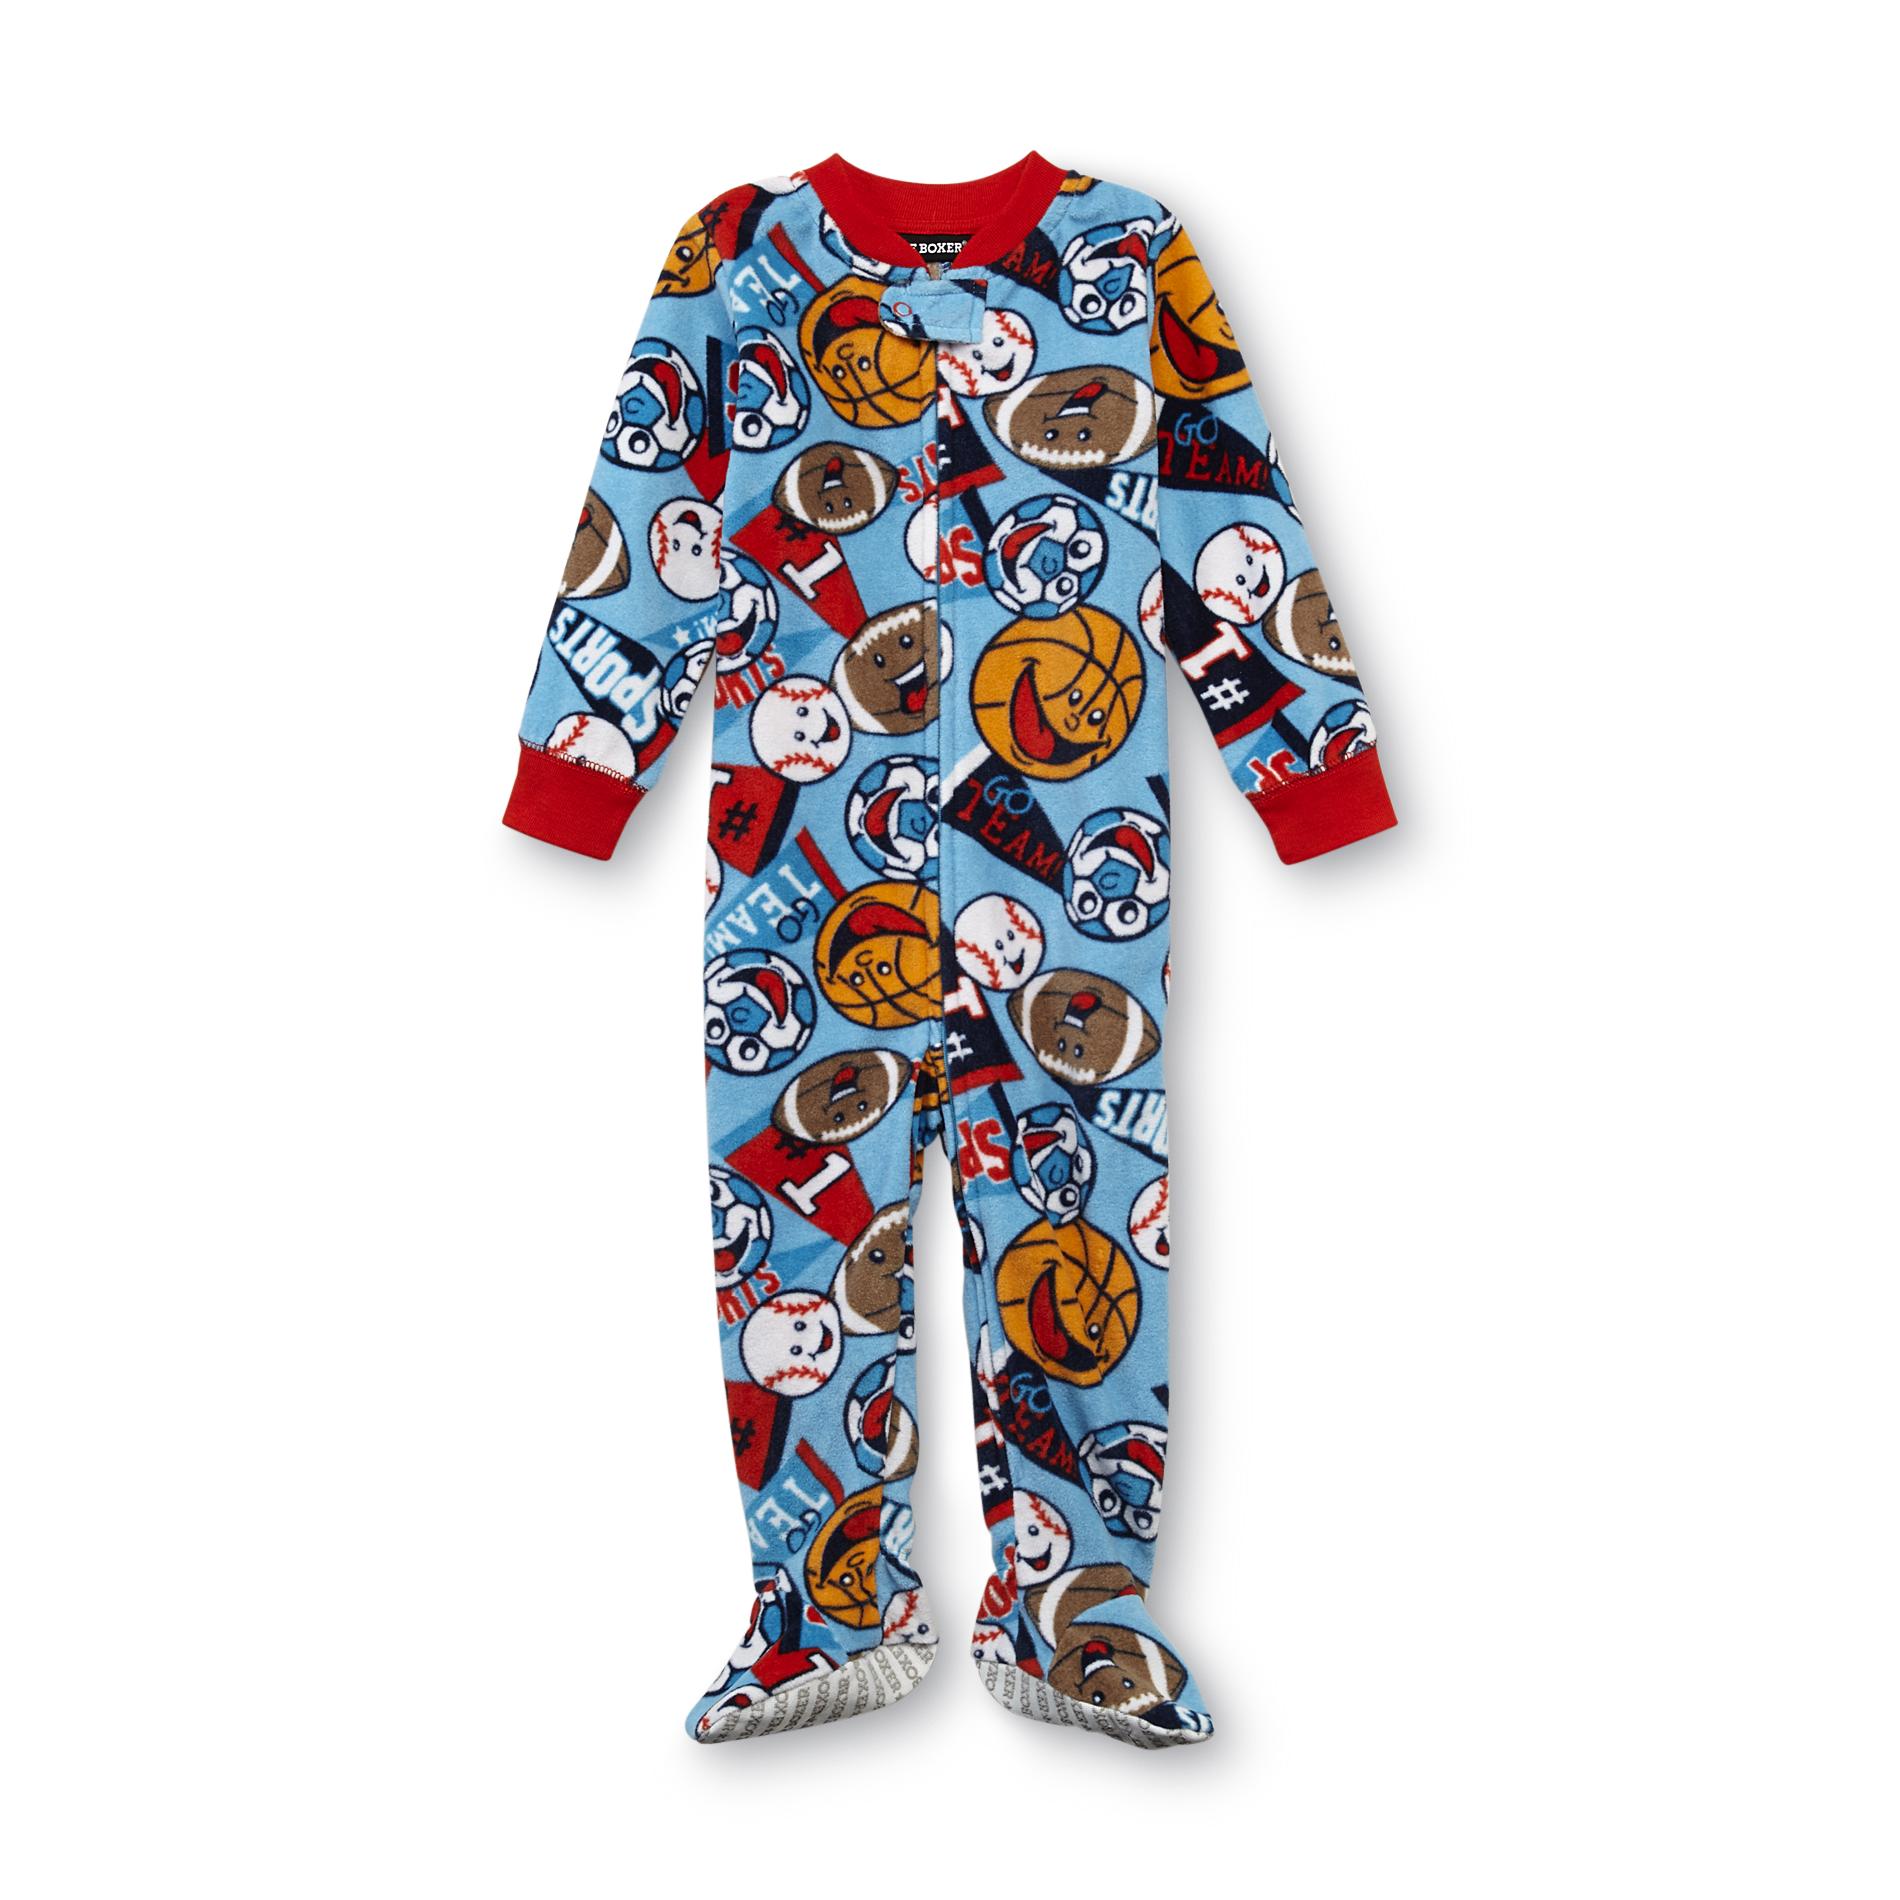 Joe Boxer Infant & Toddler Boy's Footed Sleeper Pajamas - Sports